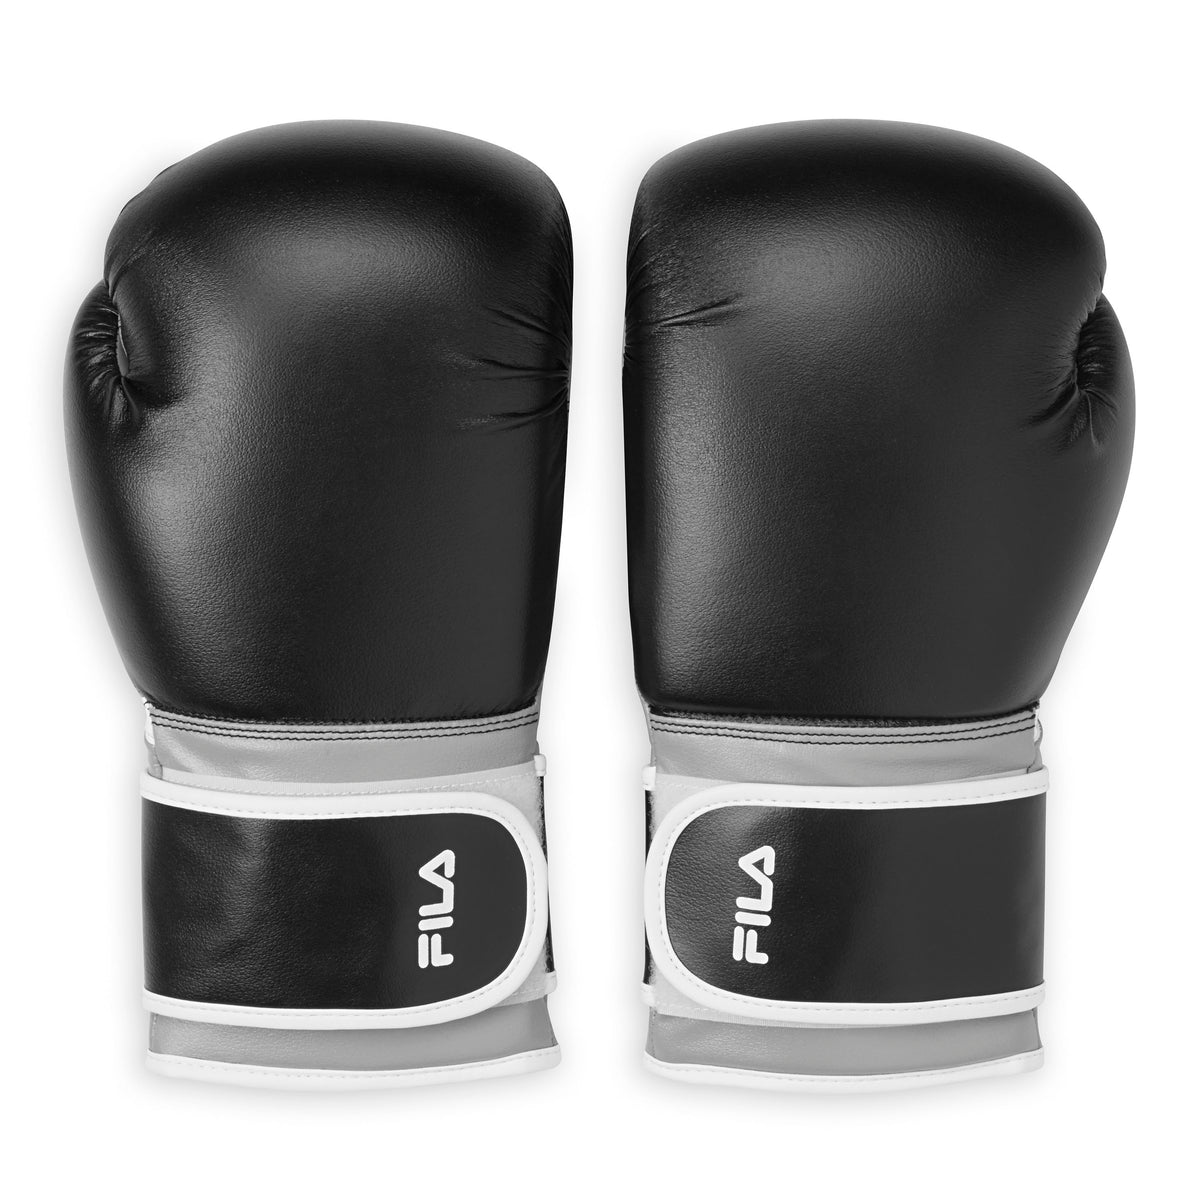 FILA Boxing Gloves (12oz) Black/Grey both gloves back